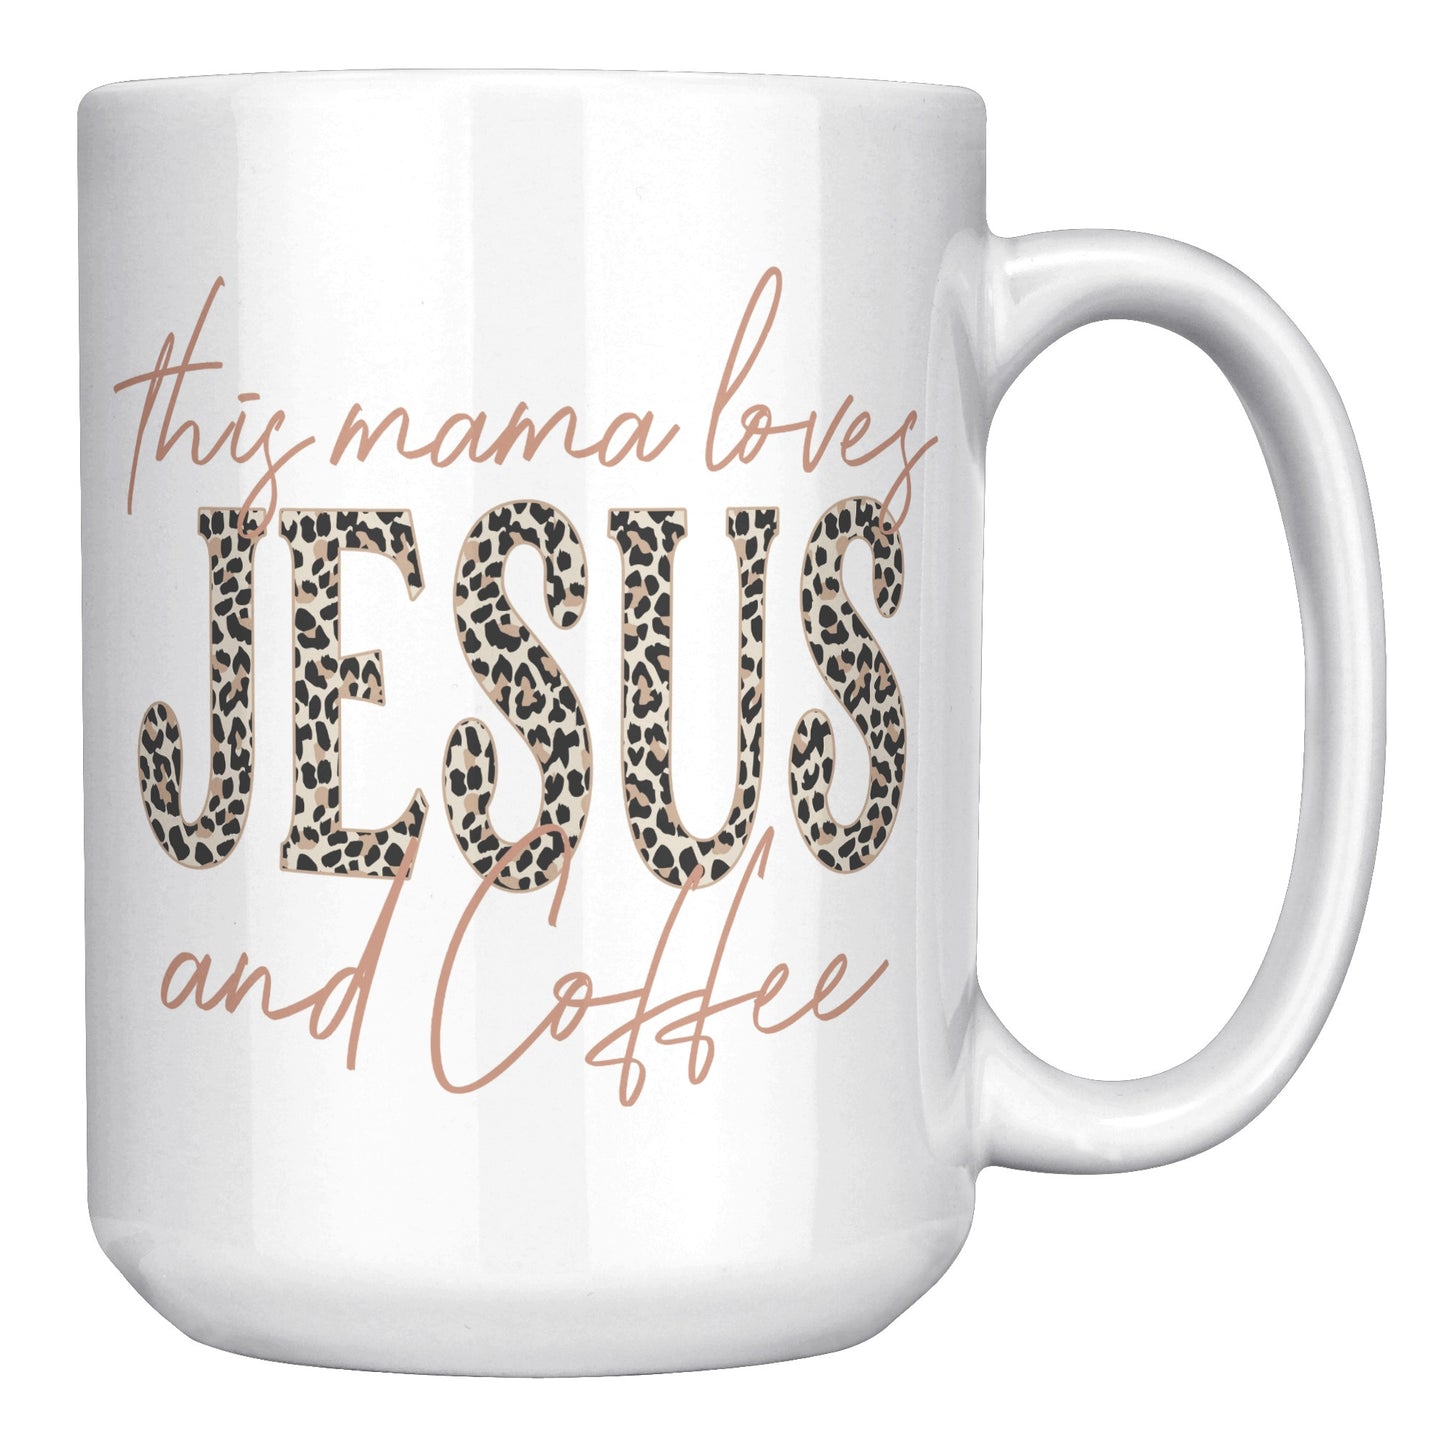 This Mama Loves Jesus & Coffee 15oz Coffee Mug